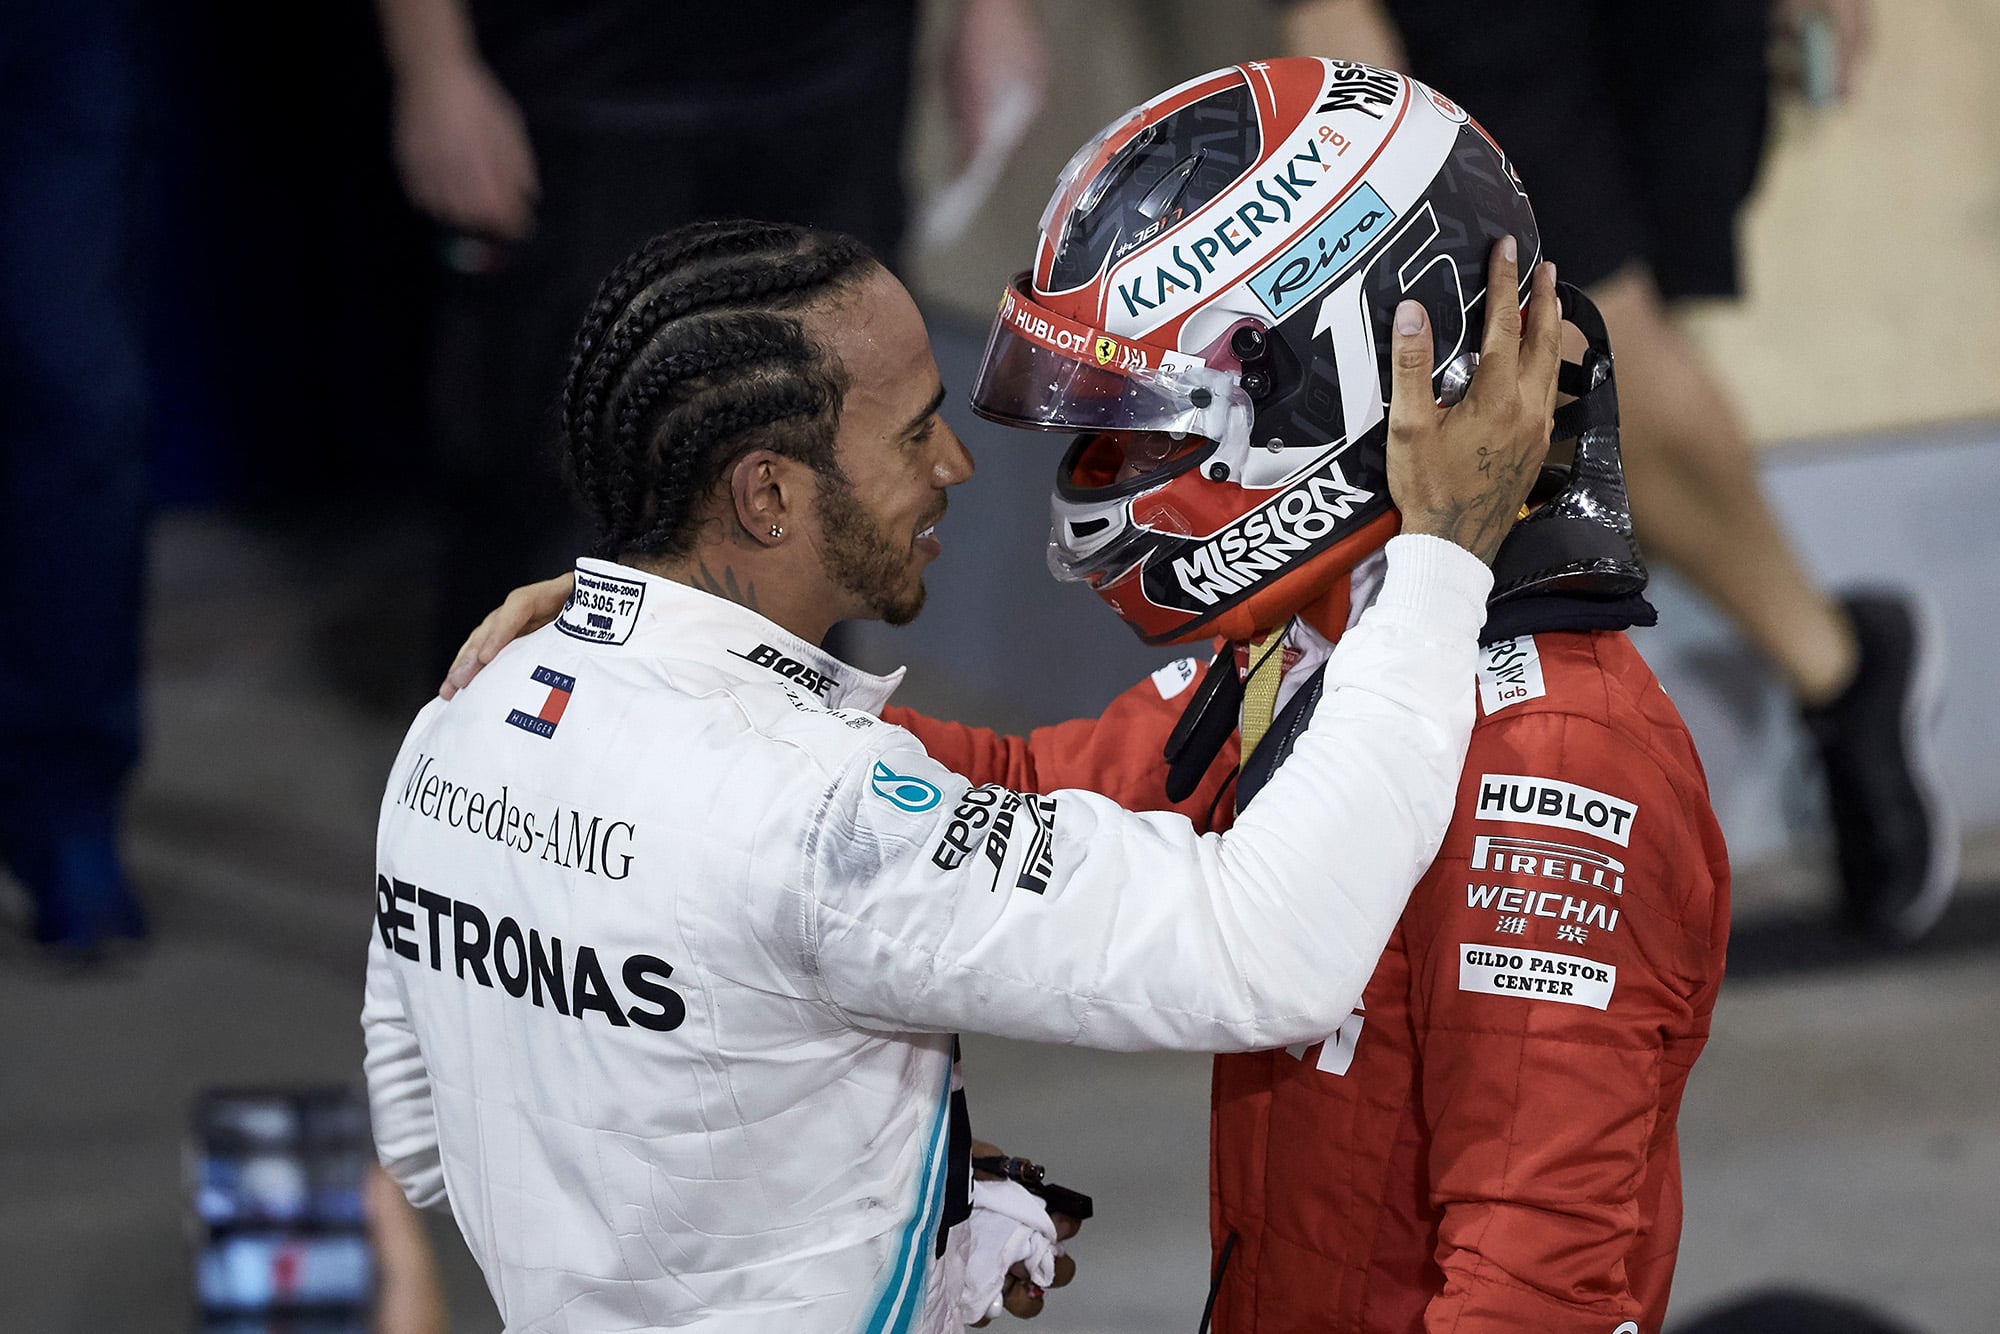 Lewis Hamilton consoles Charles Leclerc after the 2019 Bahrain Grand Prix